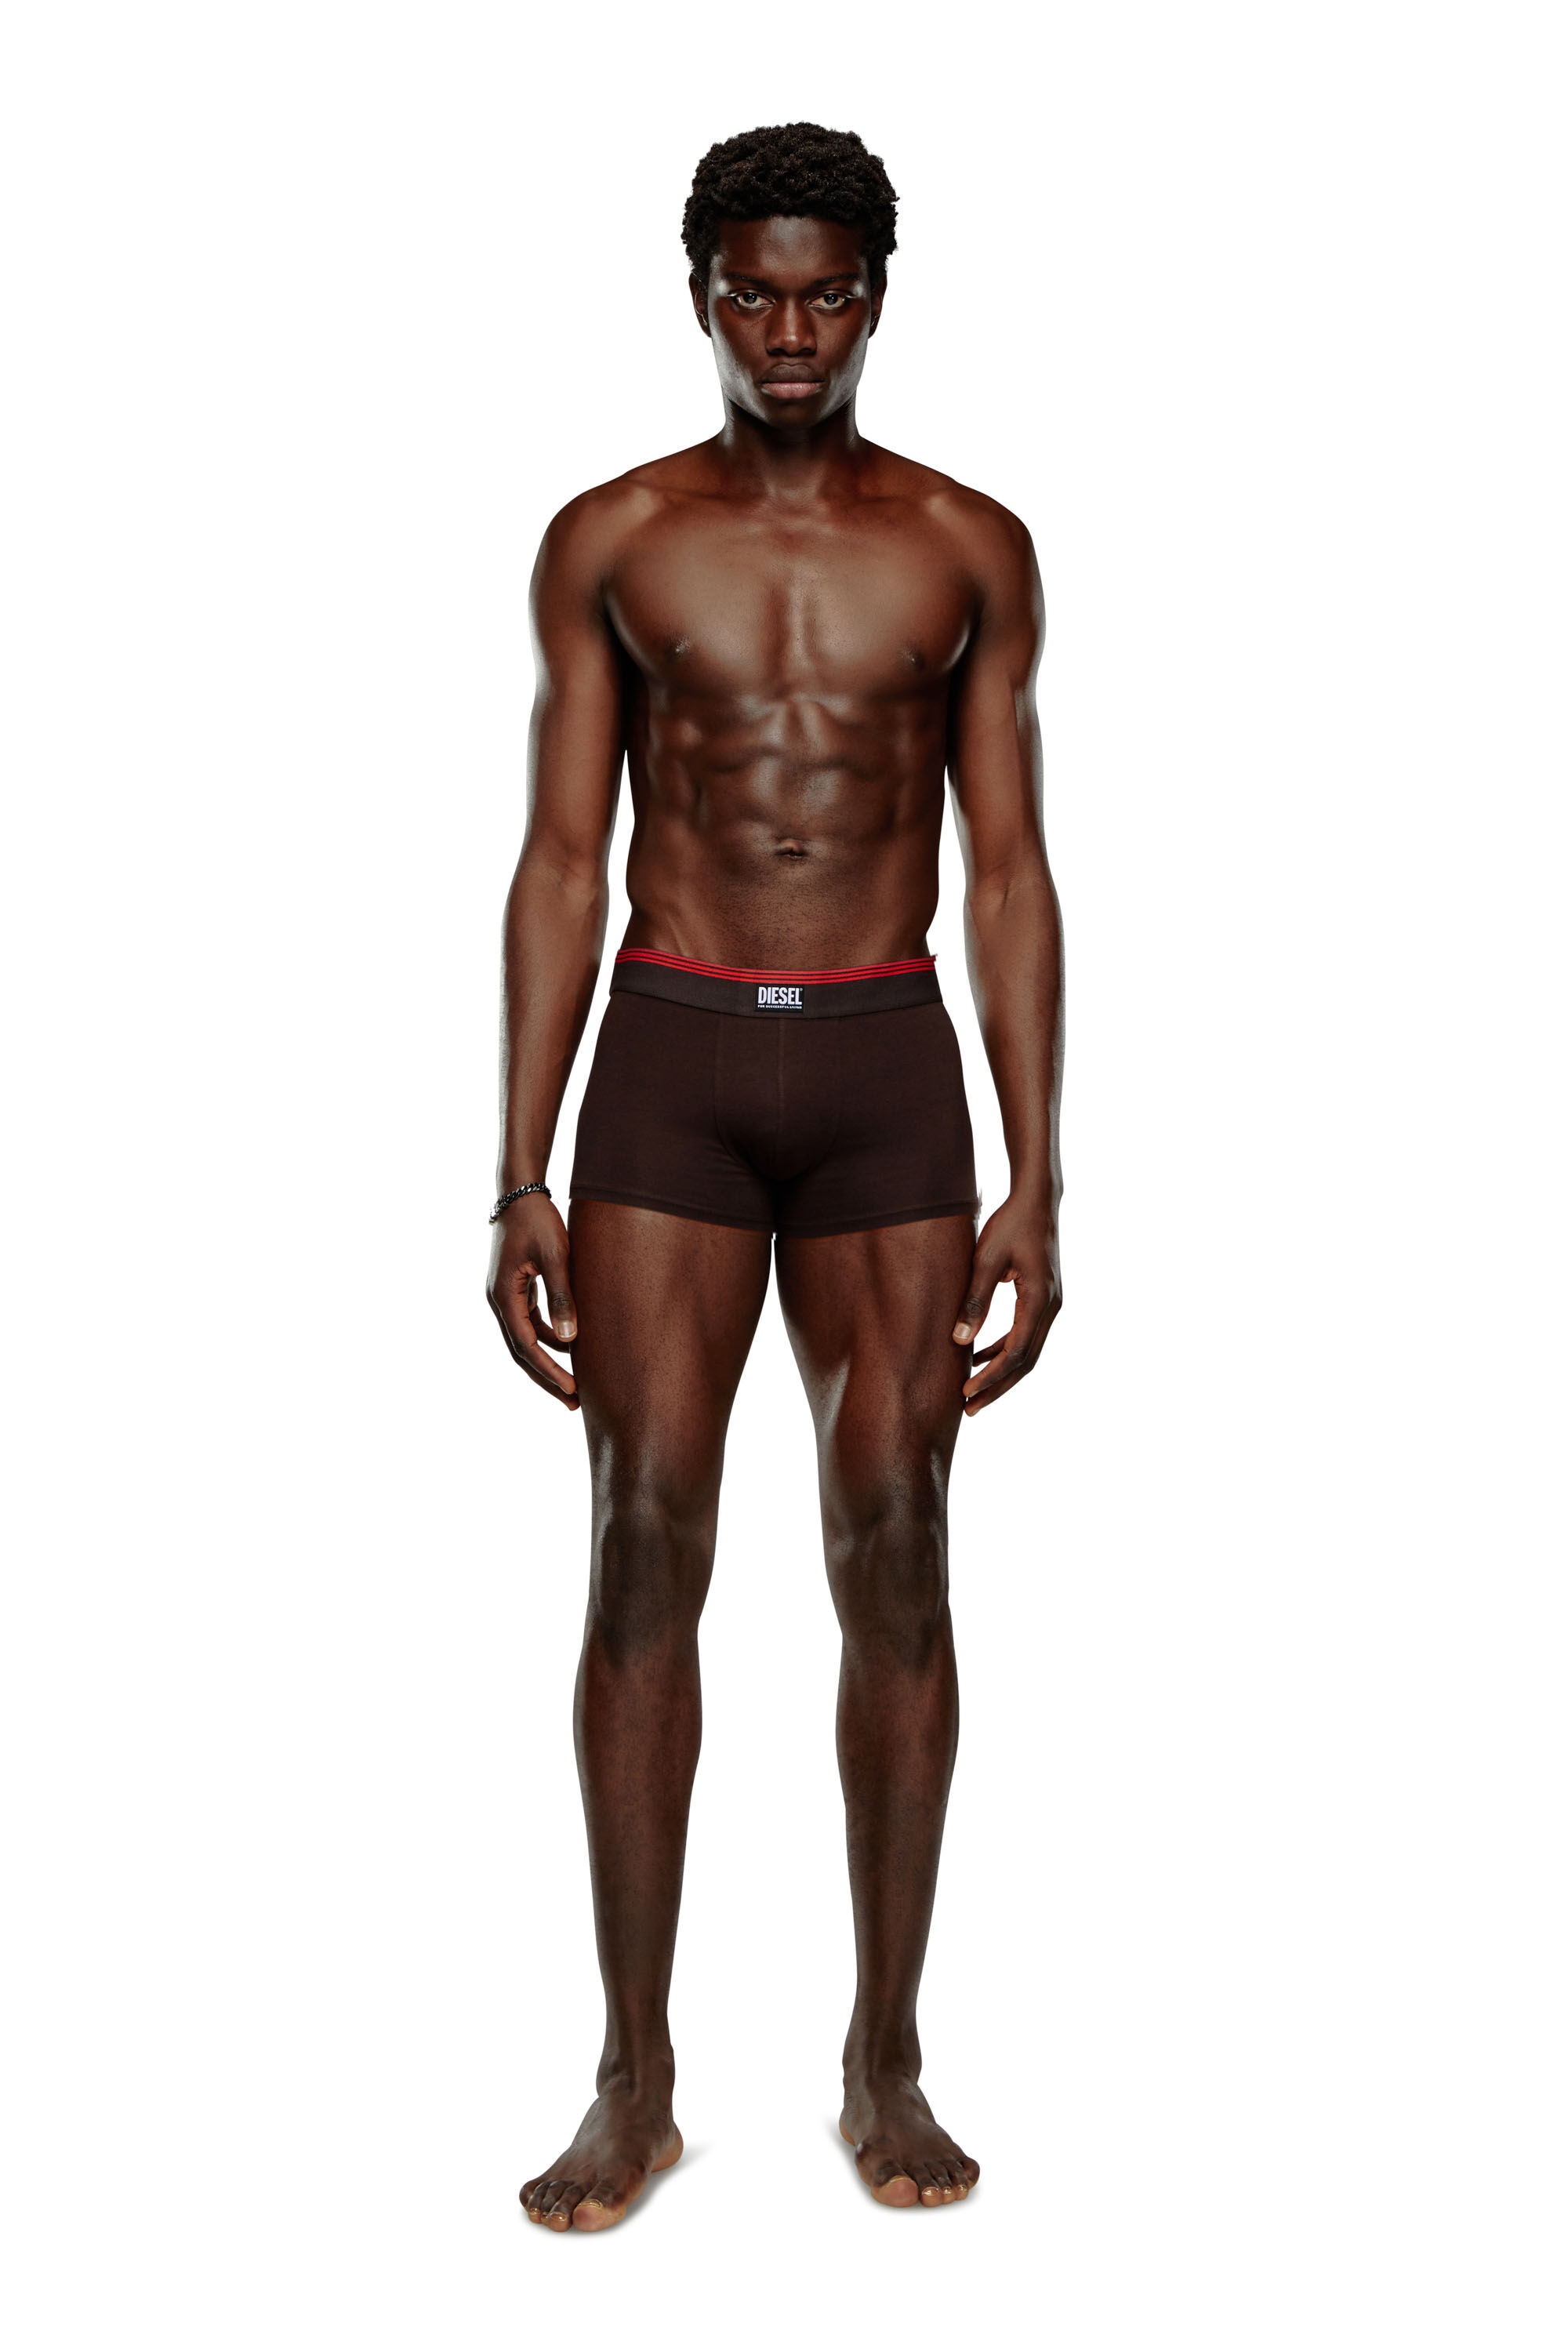 Diesel - UMBX-DAMIENTHREEPACK, Man Three-pack nude cotton boxer briefs in Brown - Image 1